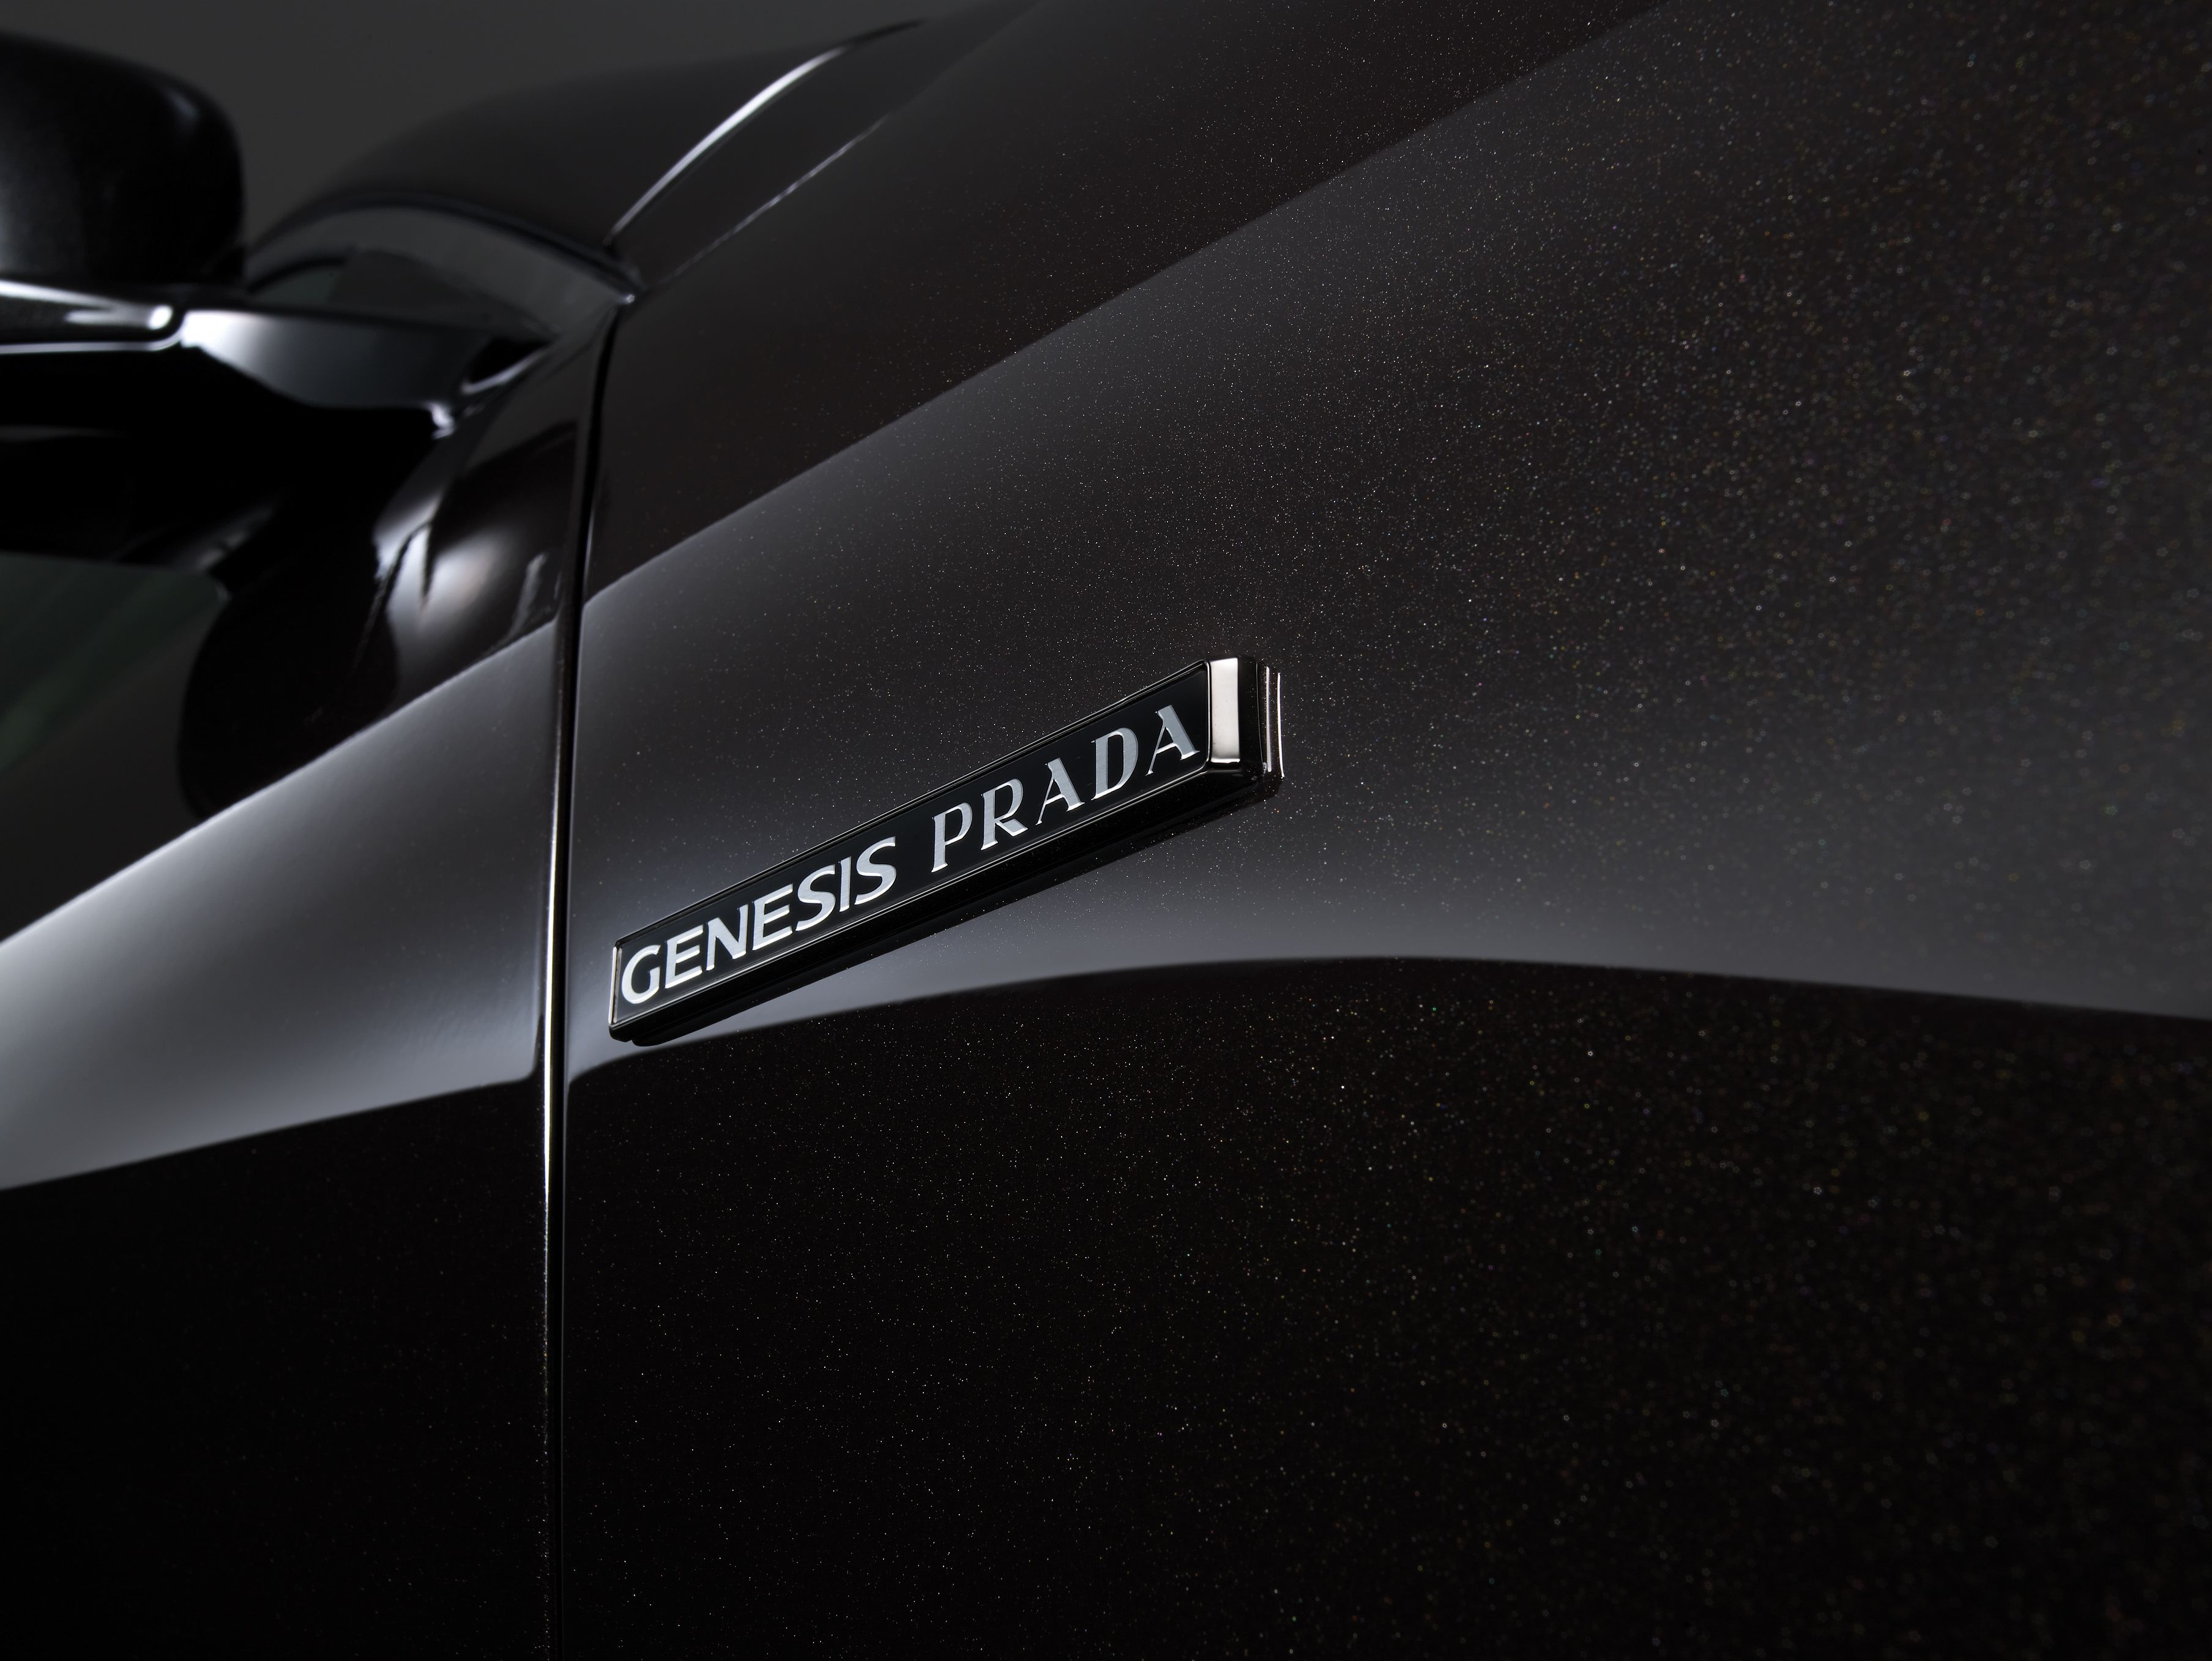 2012 Hyundai Genesis Prada Limited Edition